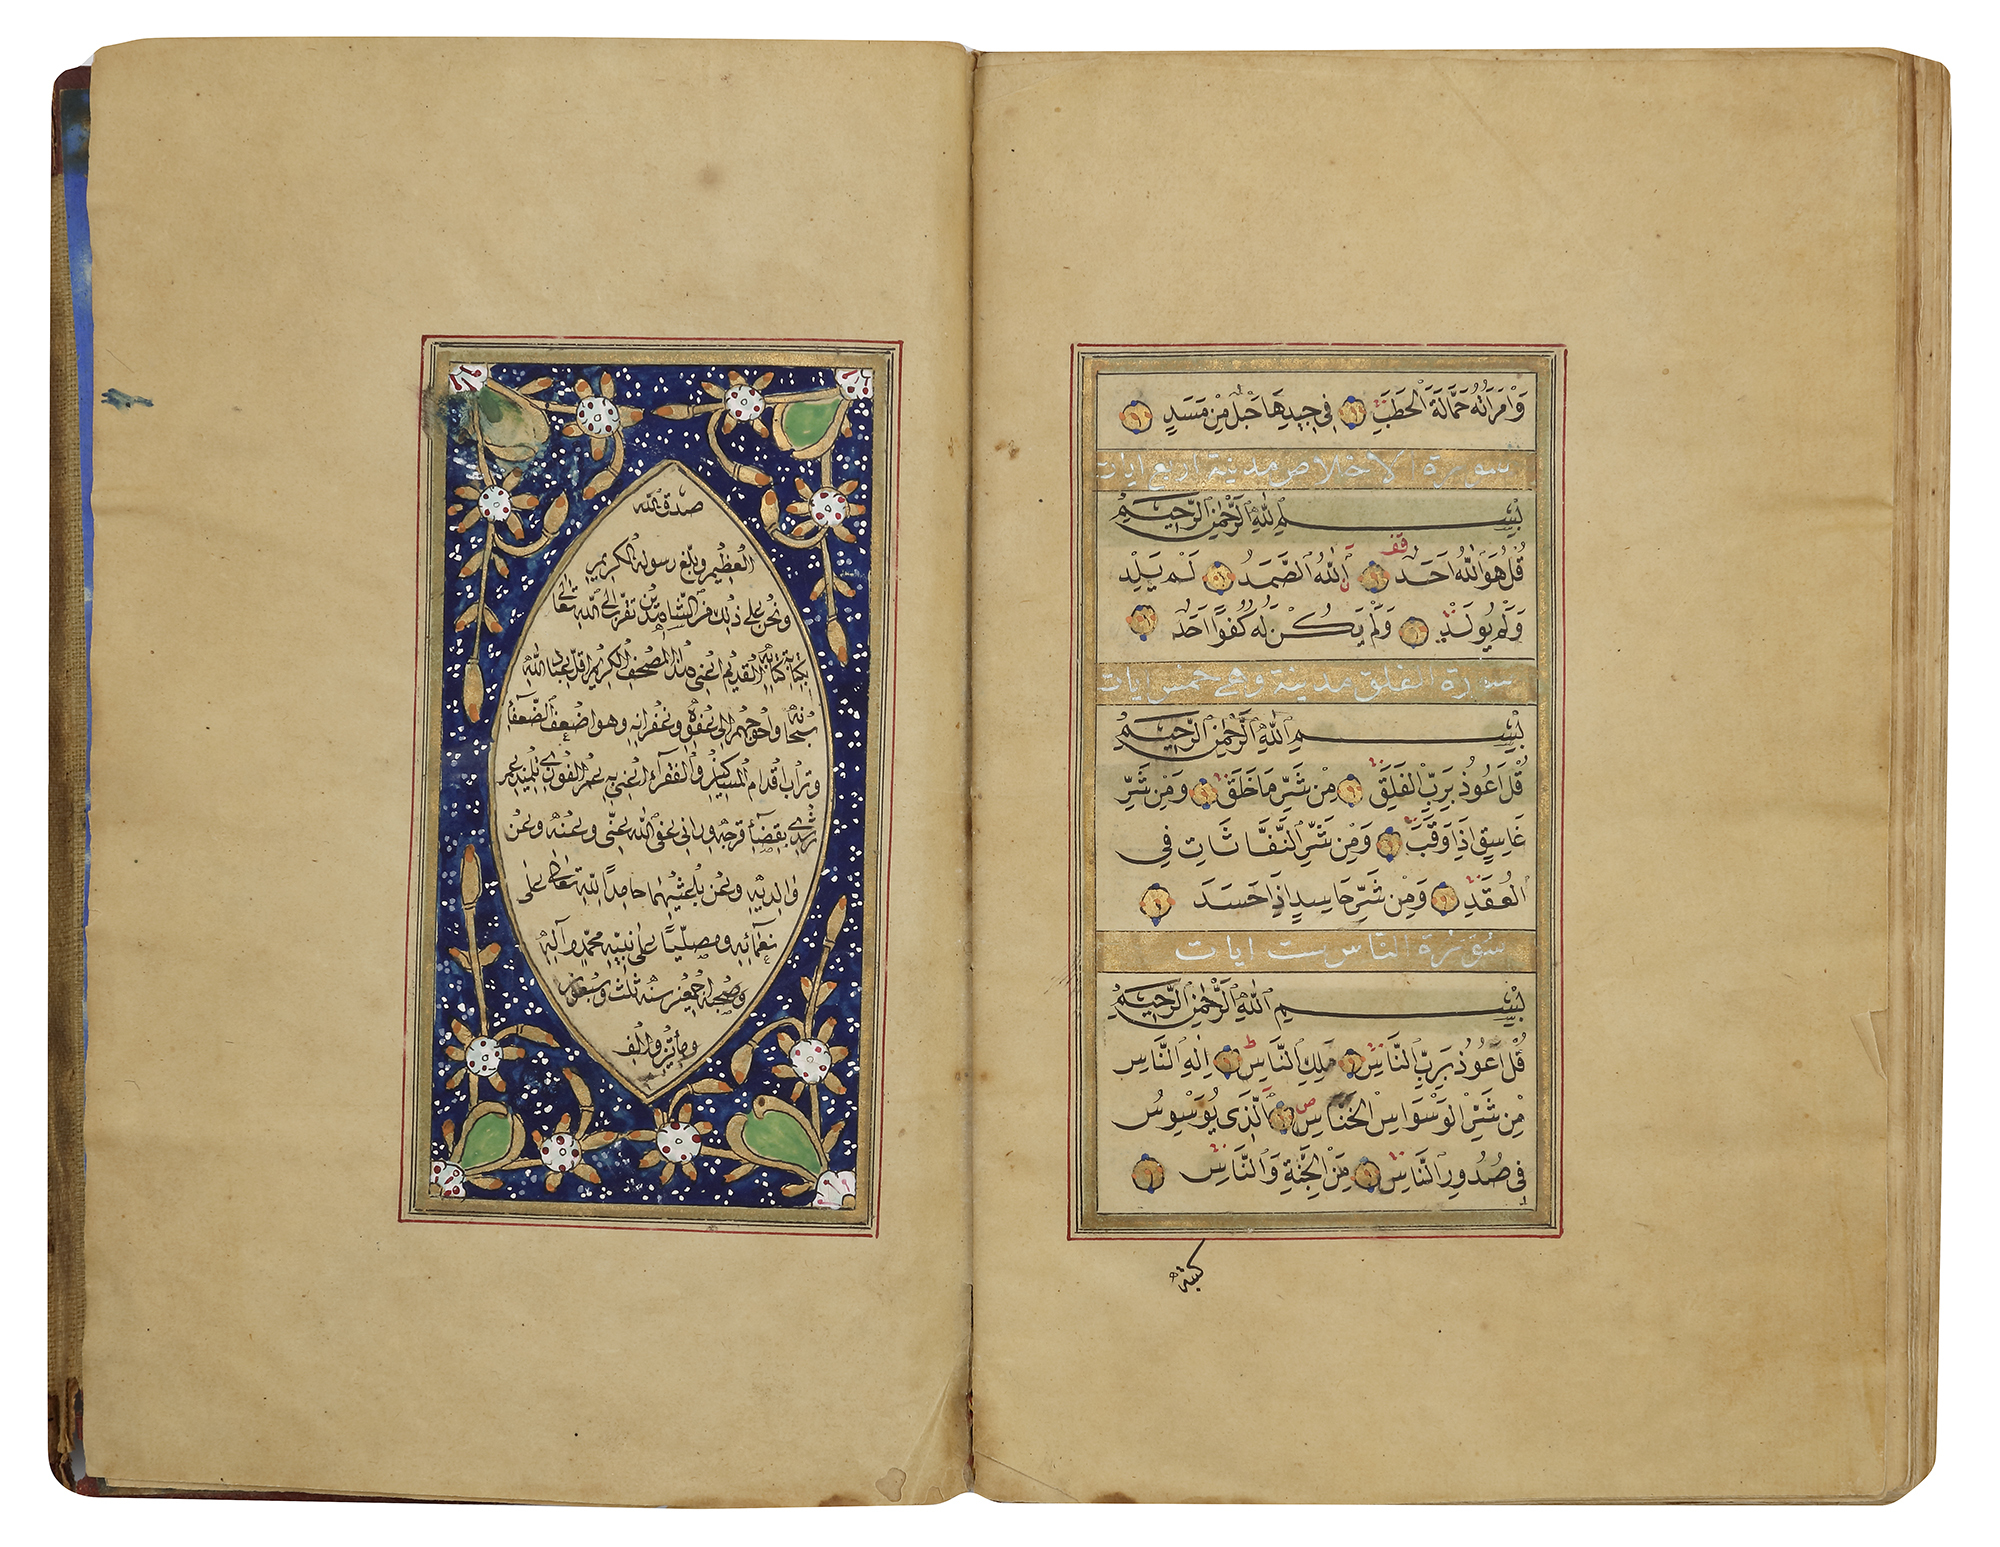 A FINE OTTOMAN QURAN, TURKEY, WRITTEN BY OMAR AL-FAWRABI STUDENT OF OMAR RUSHDI, DATED 1273 AH/1856 - Image 9 of 20